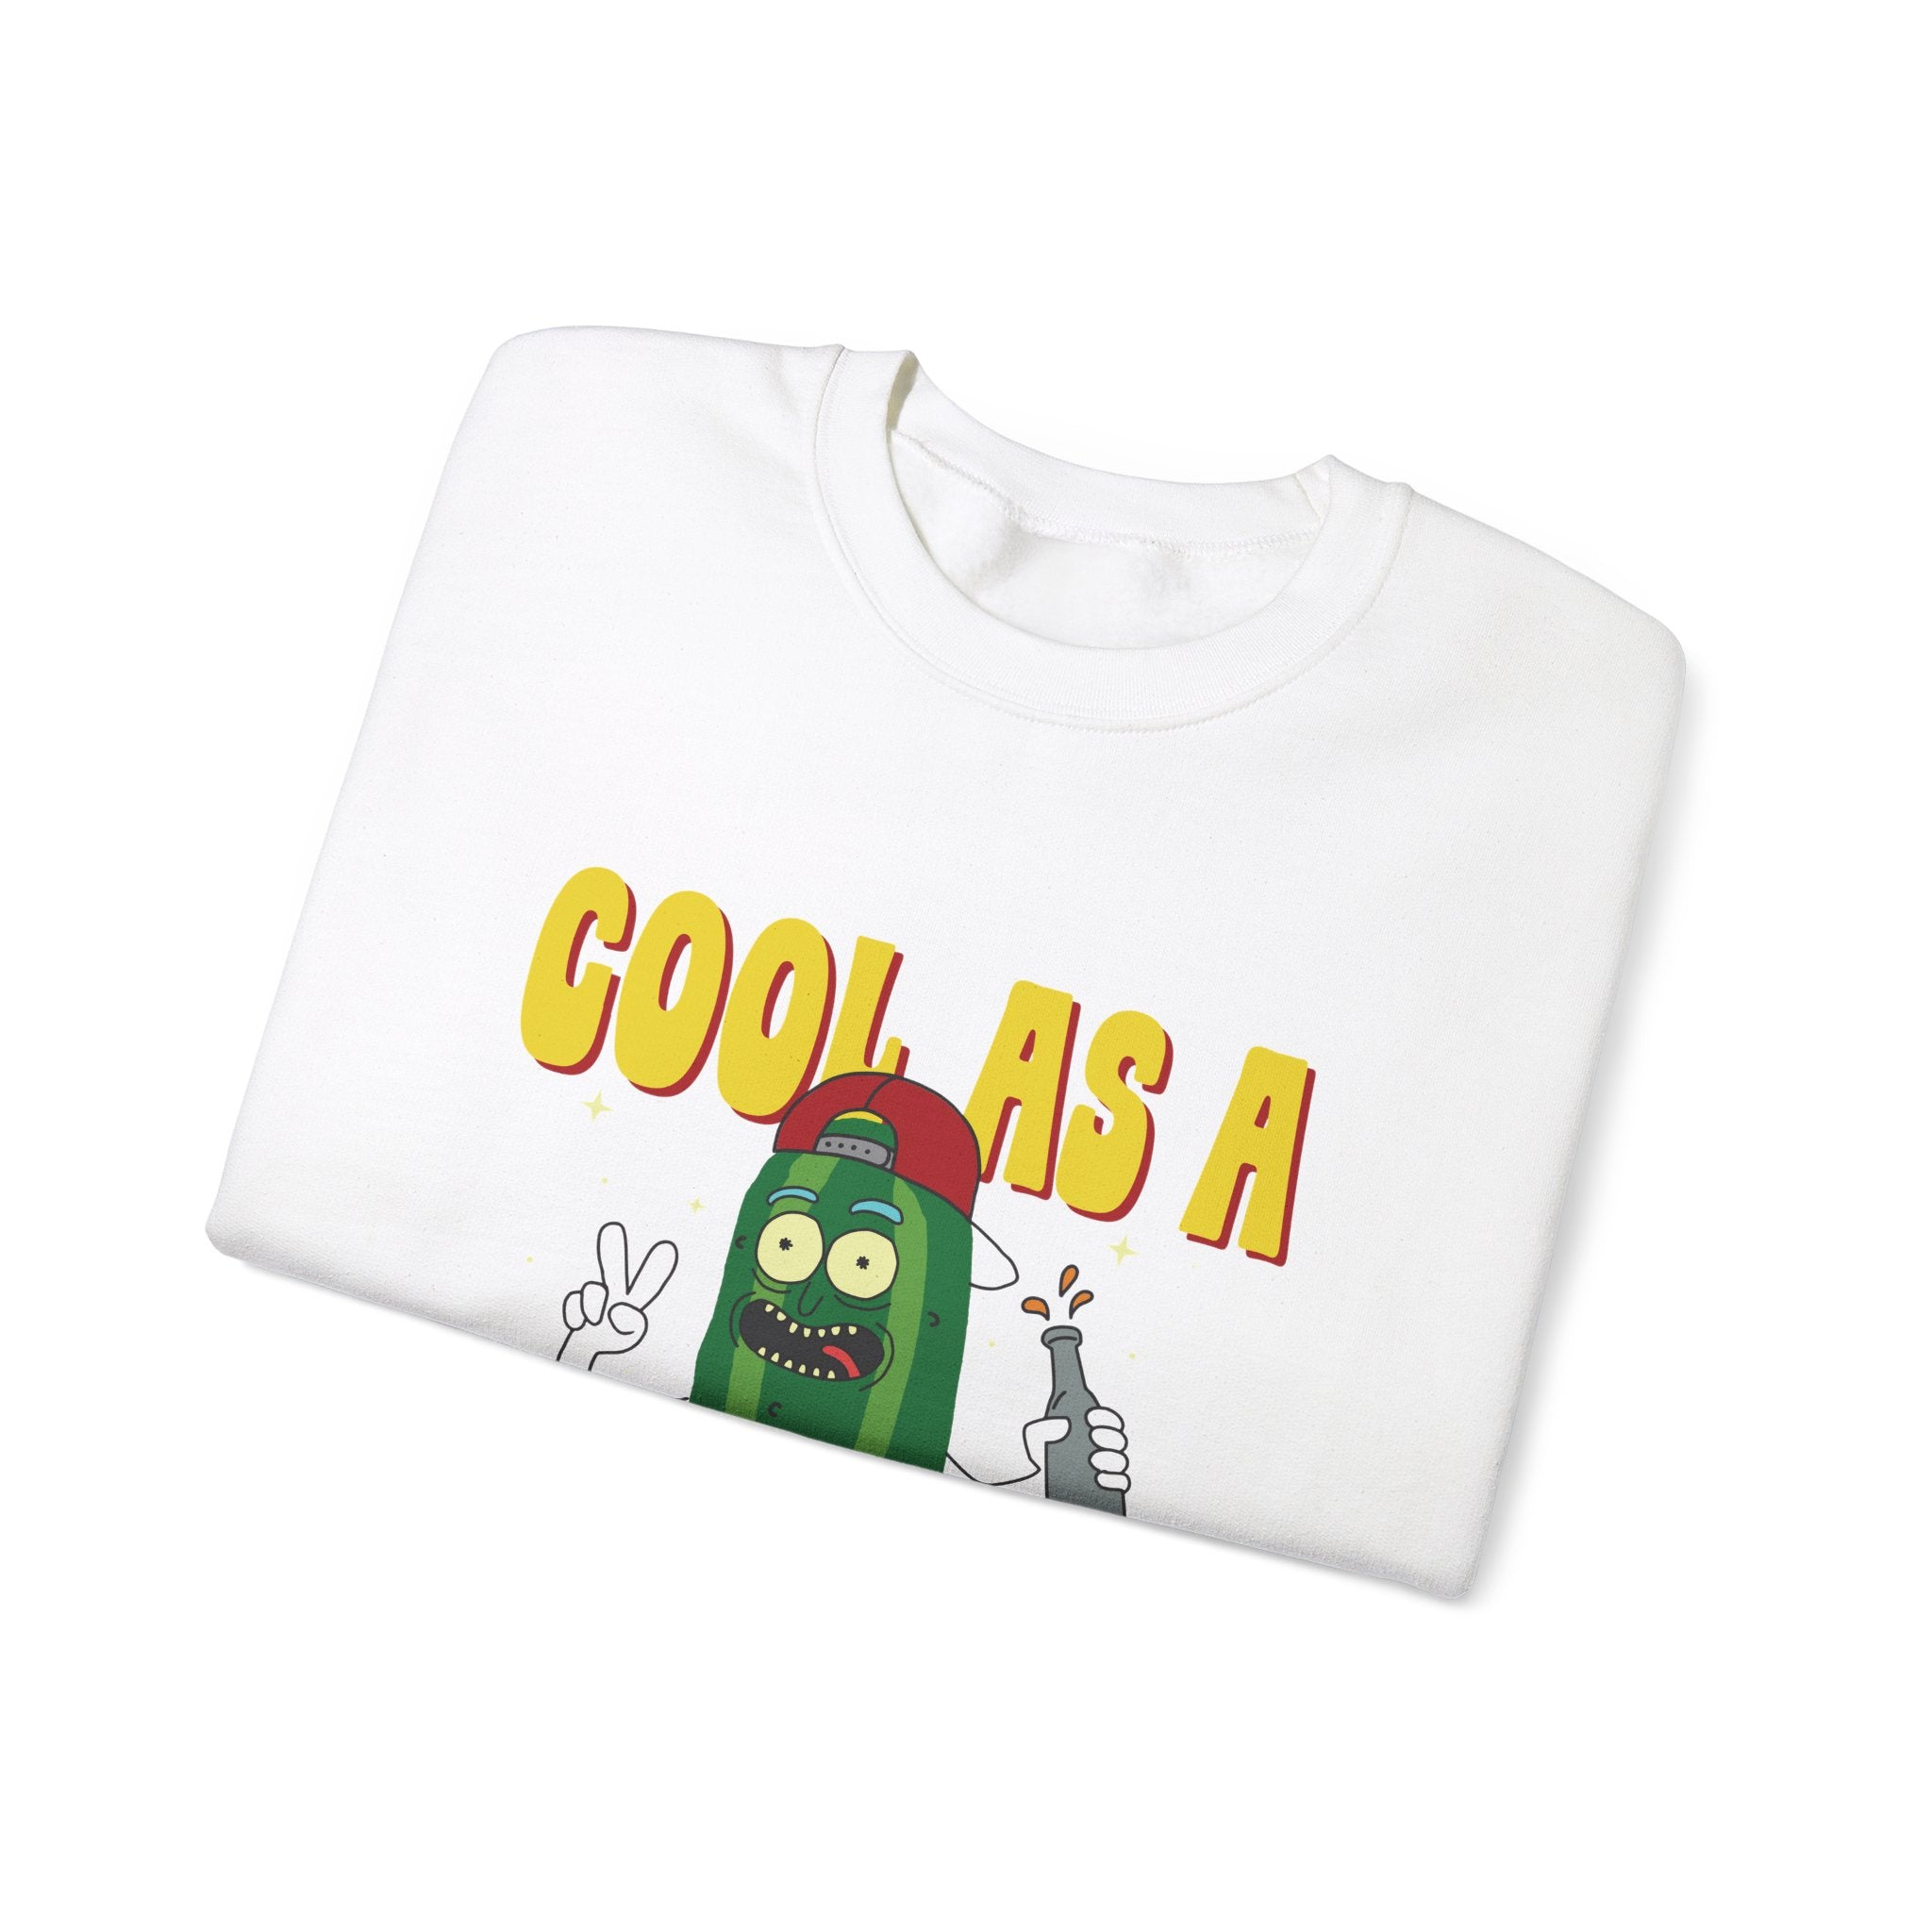 Cool as Cucumber -  Sweatshirt